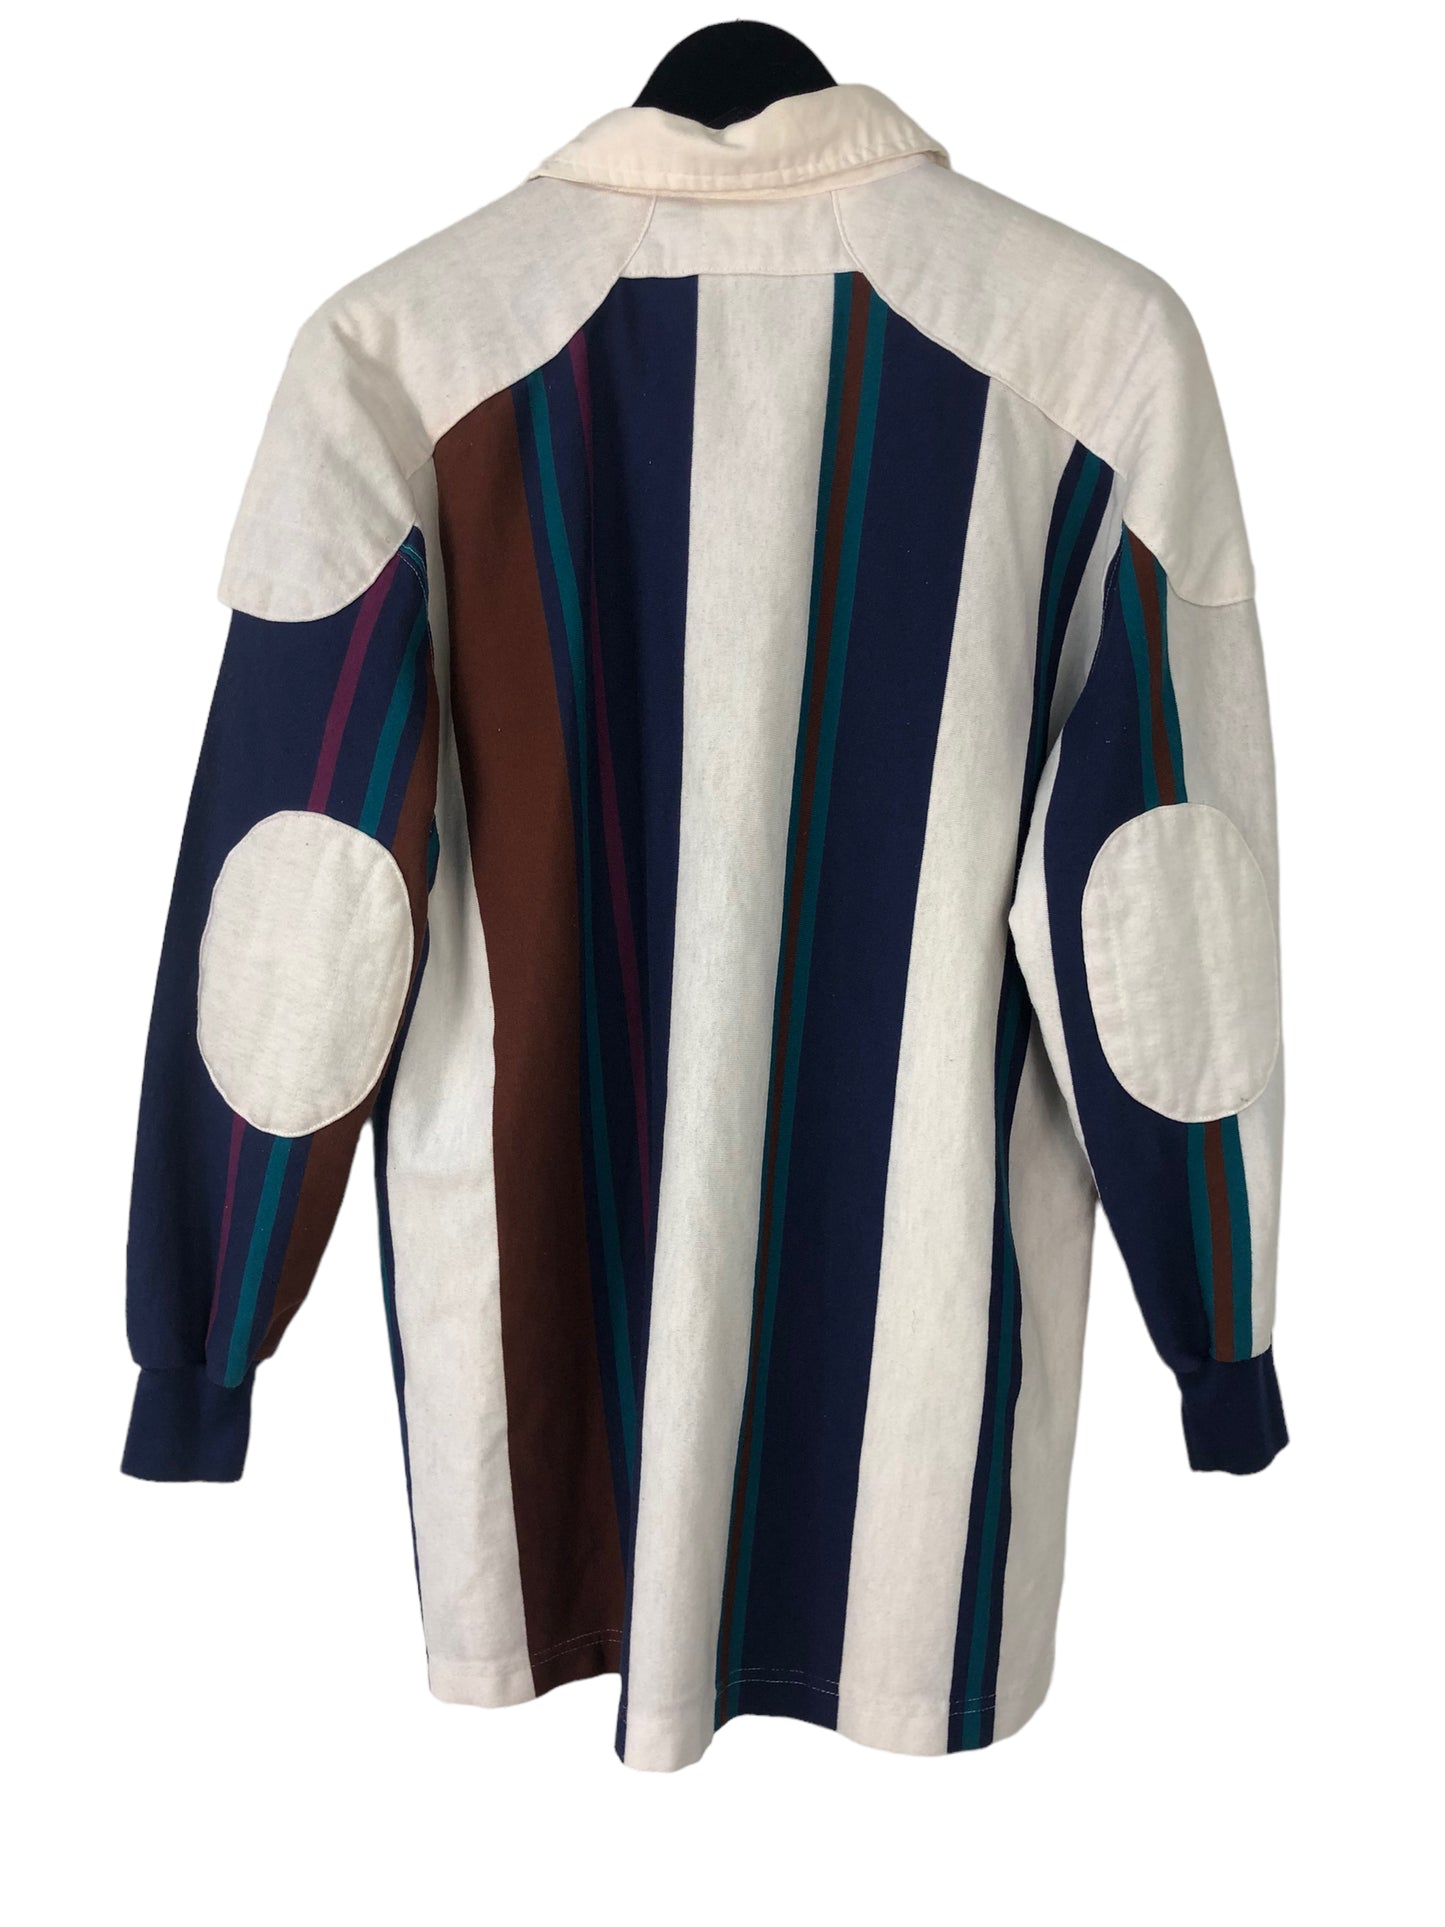 VTG Striped Rugby Wear Long Sleeve Shirt Sz L